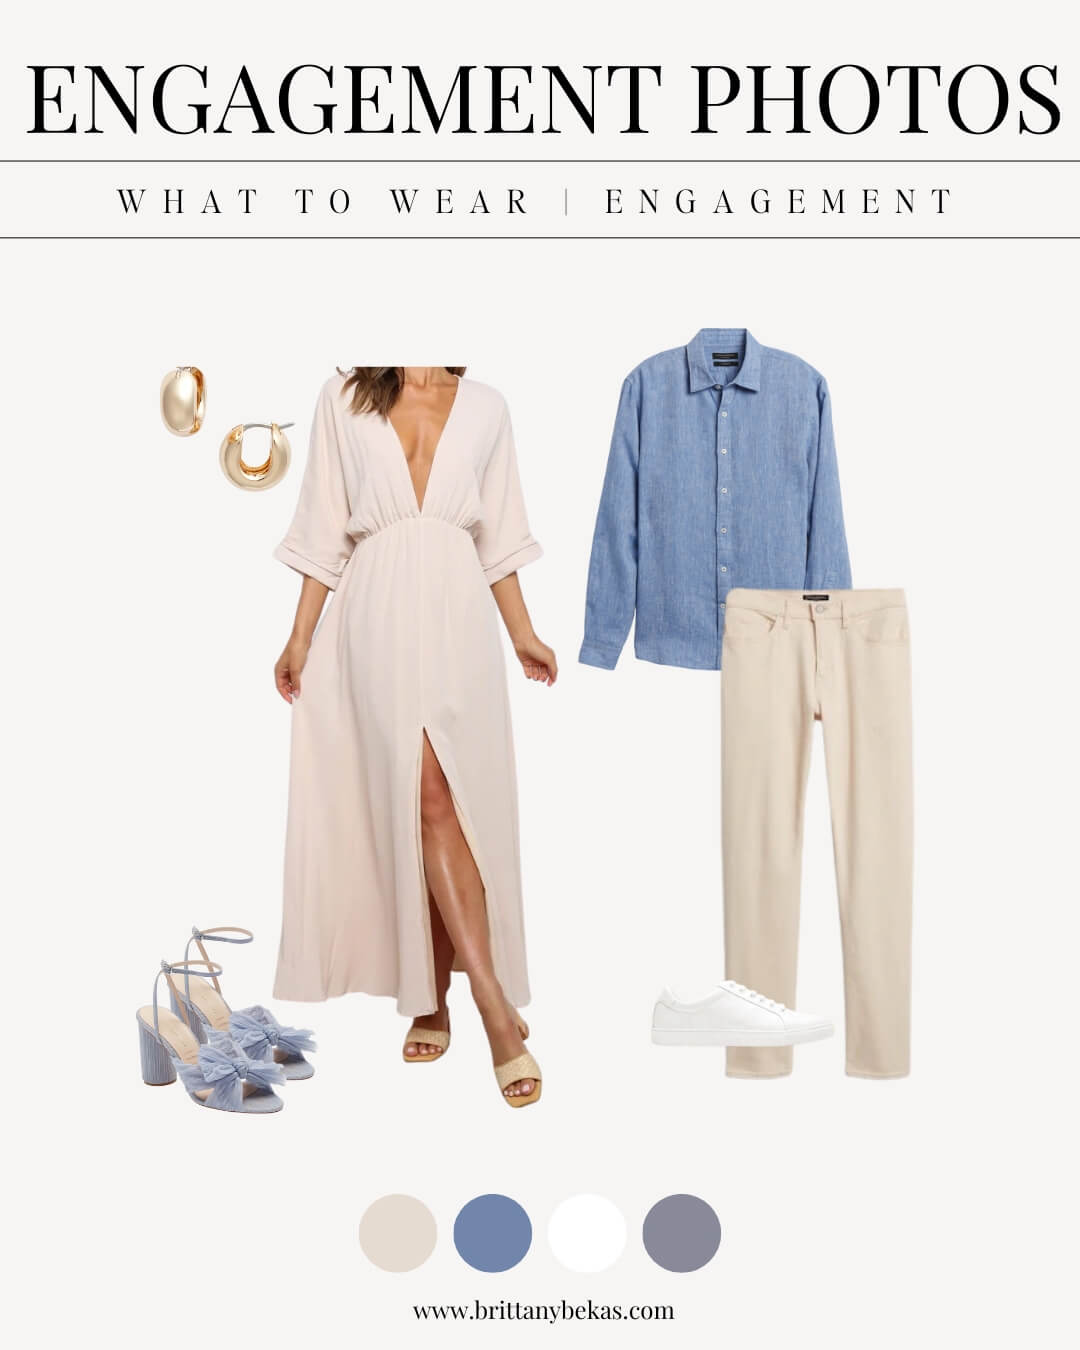 Engagement dress white